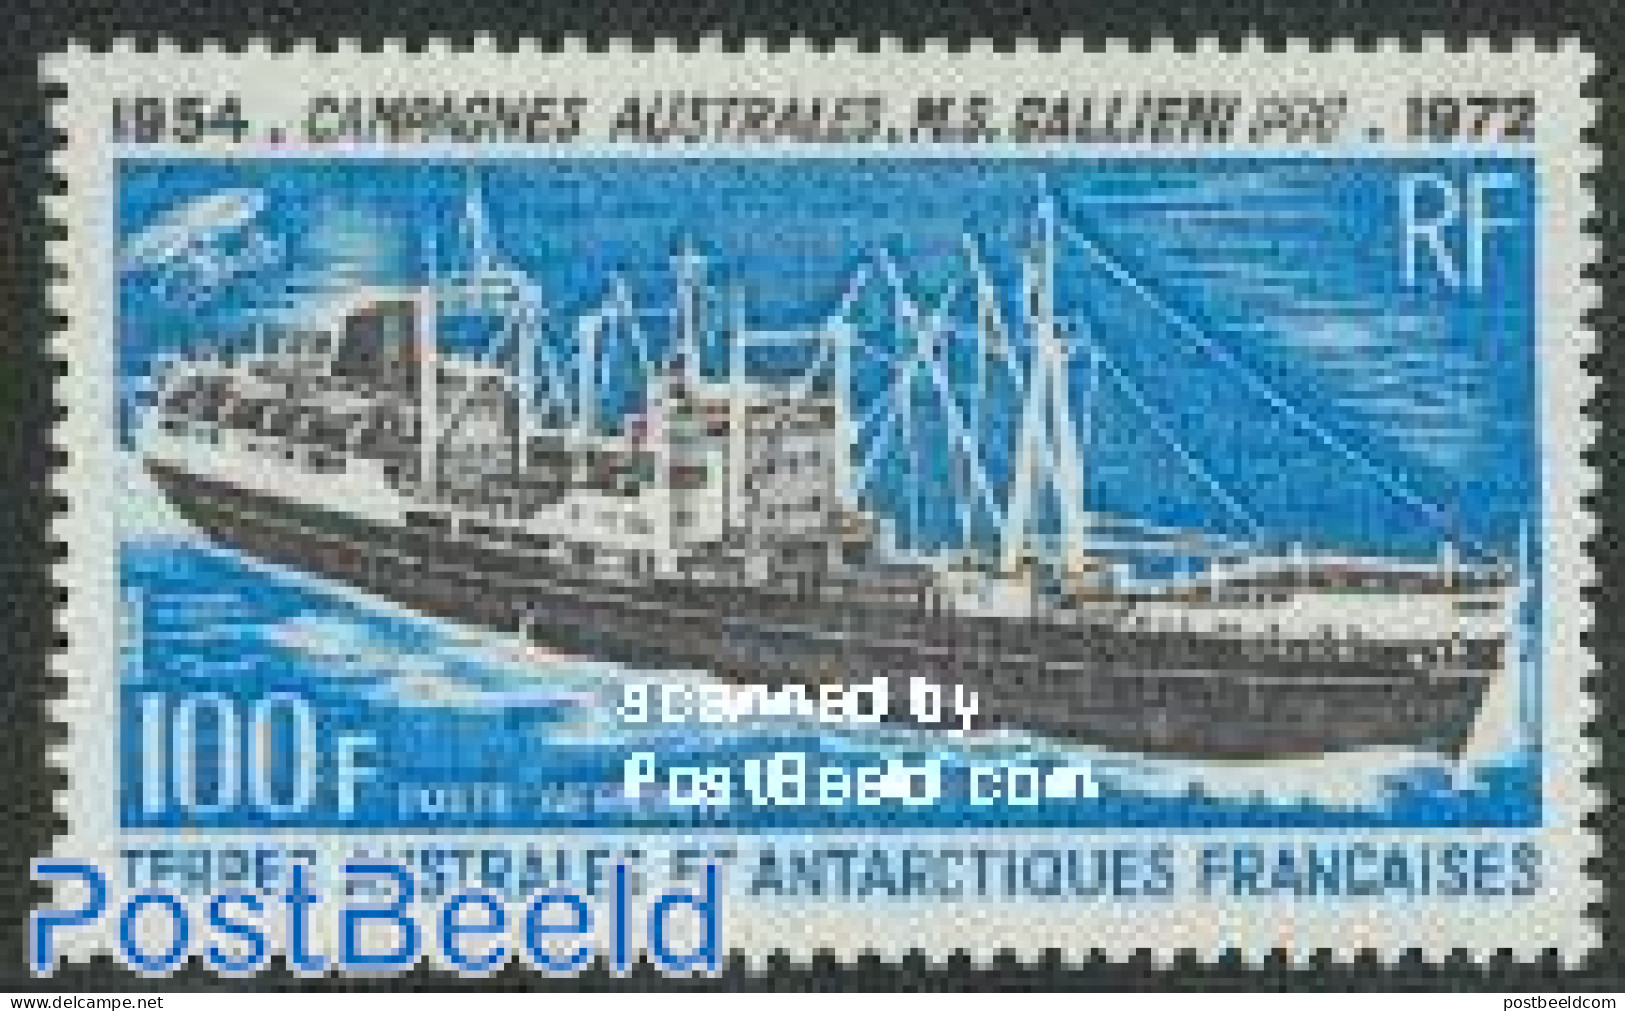 French Antarctic Territory 1973 Antarctic Ship Traffic 1v, Mint NH, Transport - Ships And Boats - Nuevos